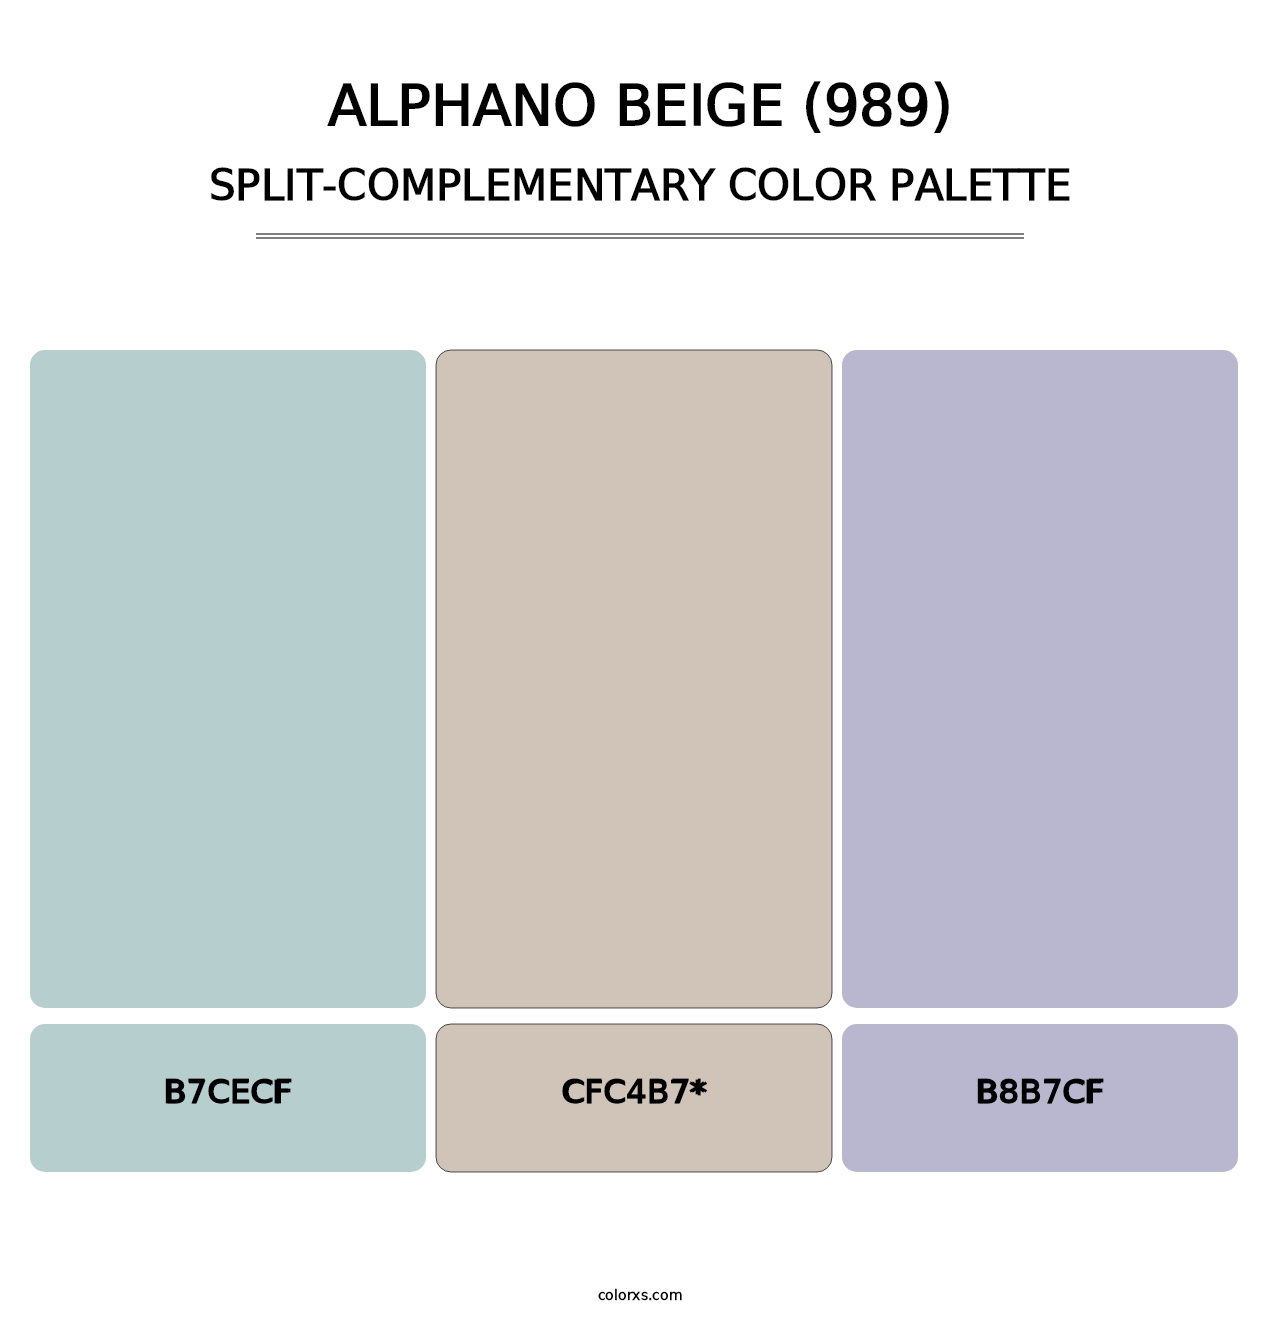 Alphano Beige (989) - Split-Complementary Color Palette